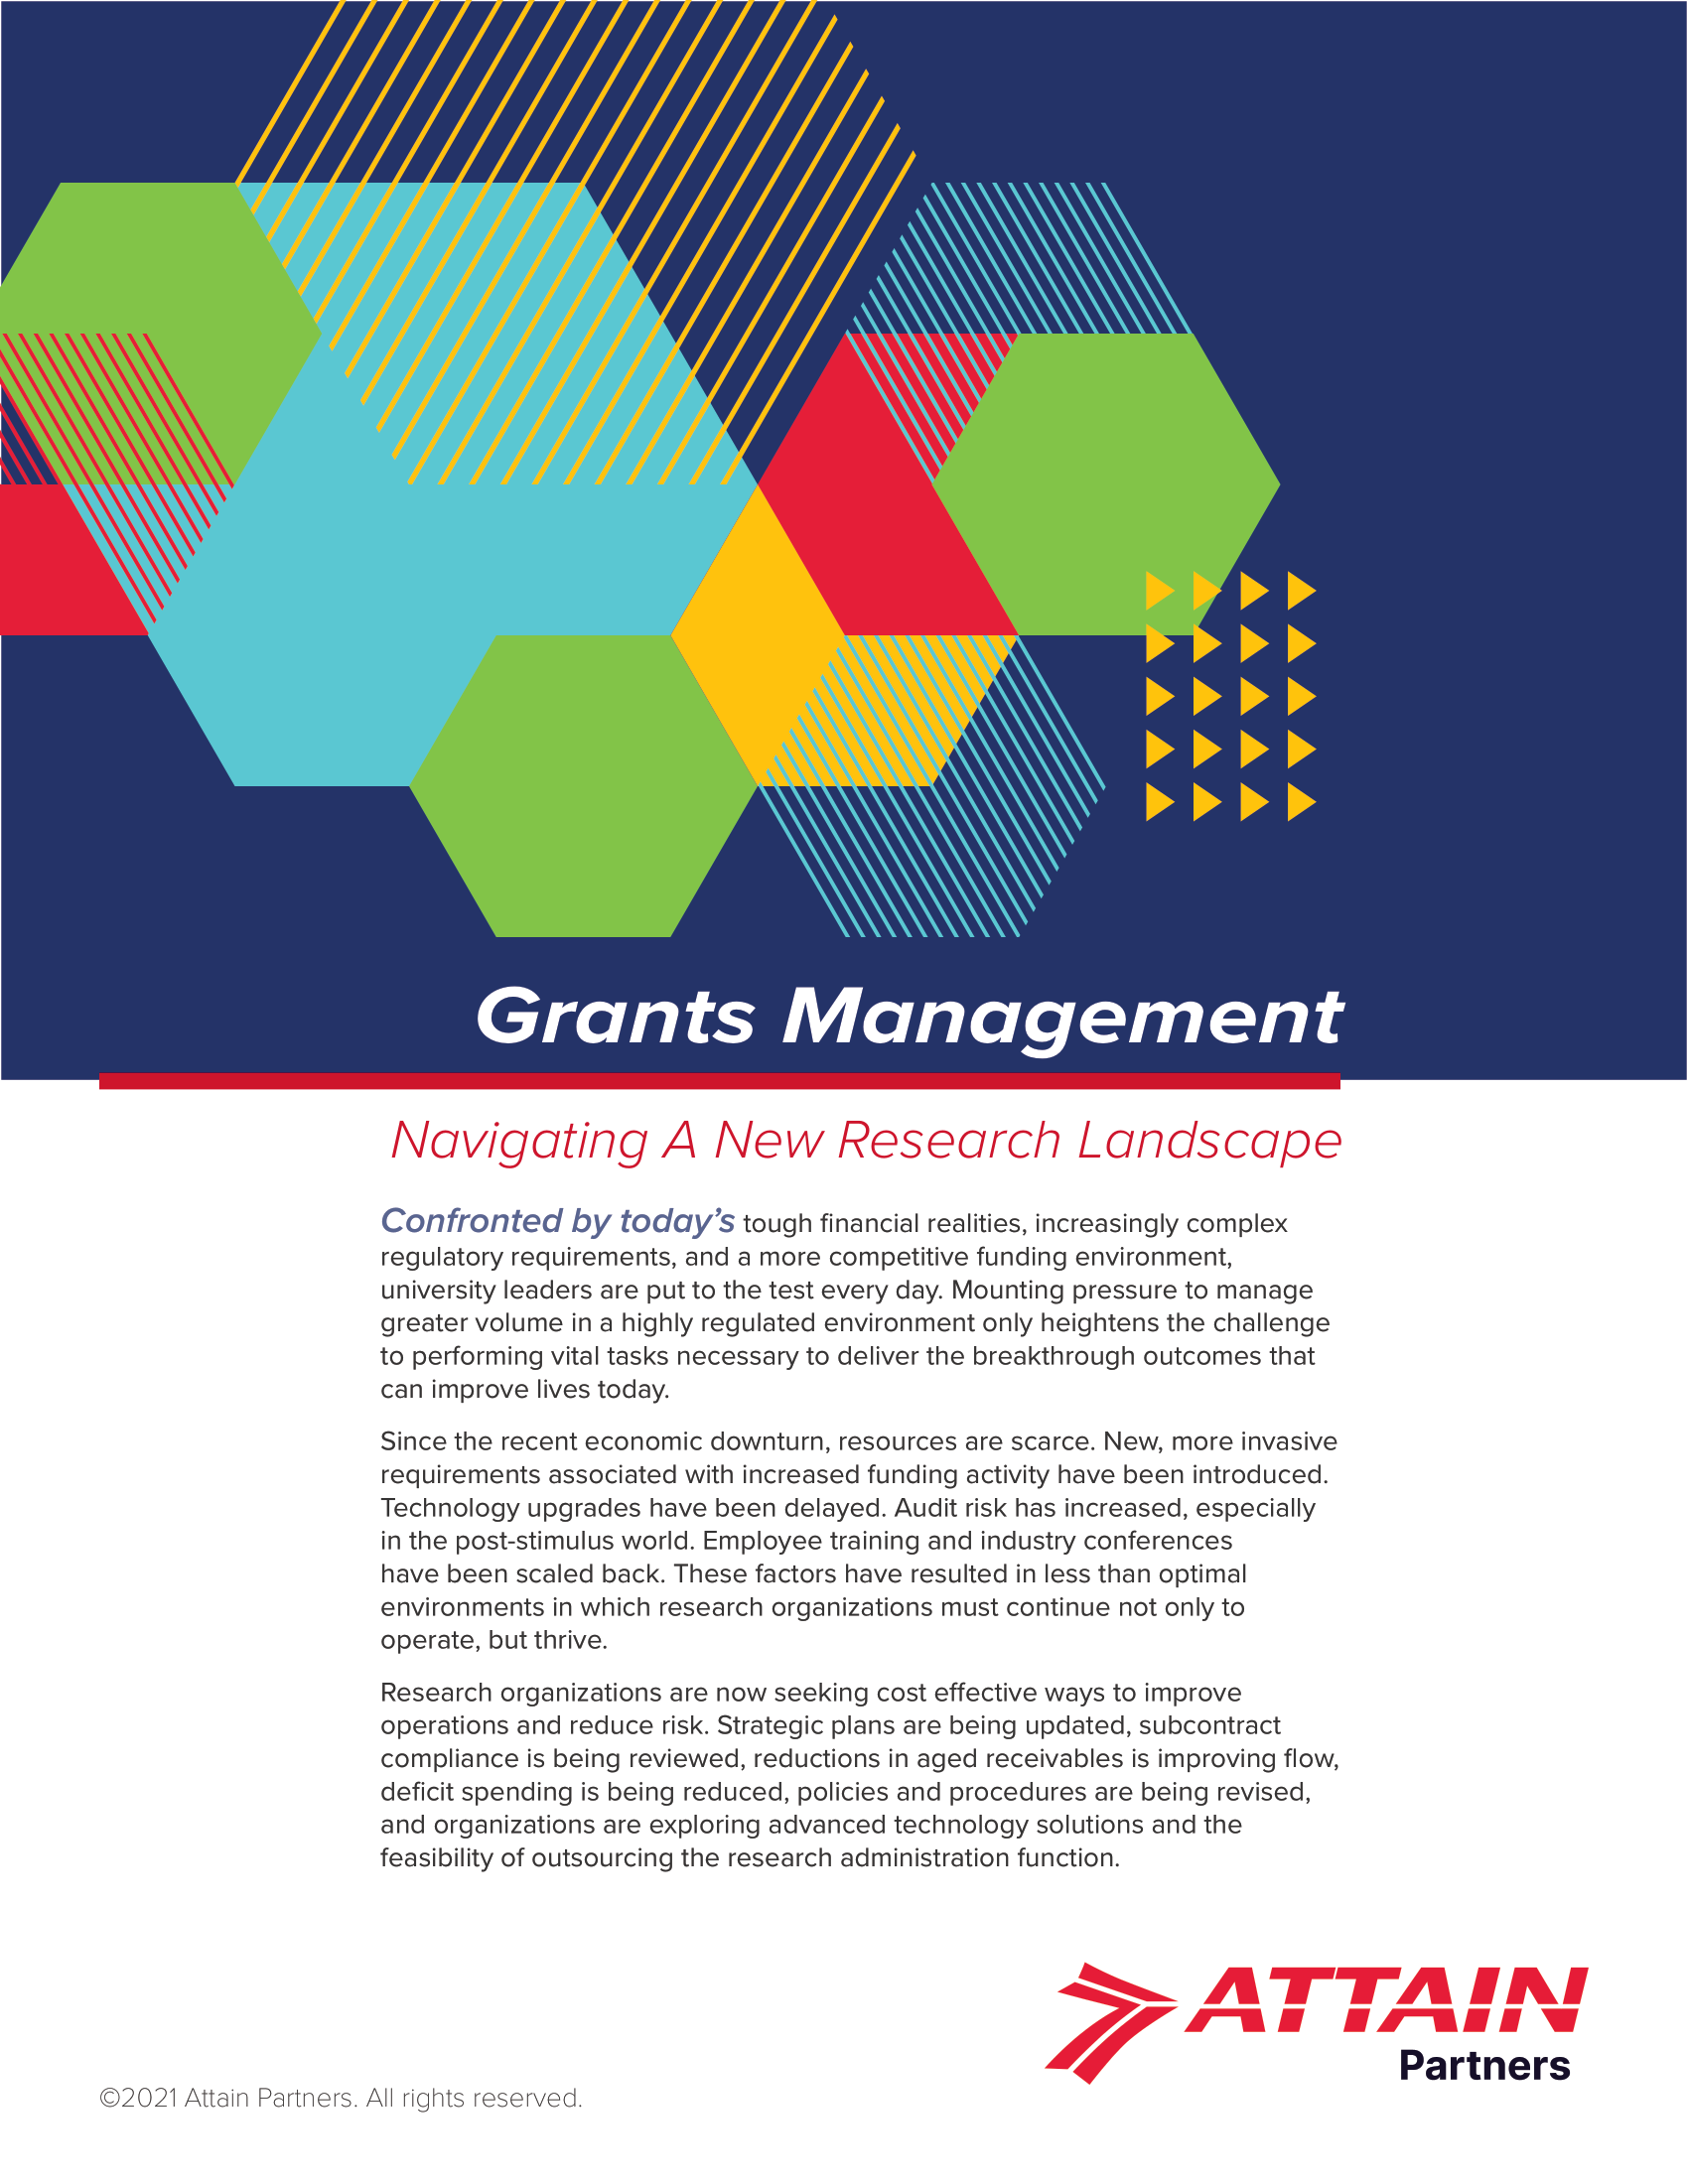 Attain Grants Management PDF cover